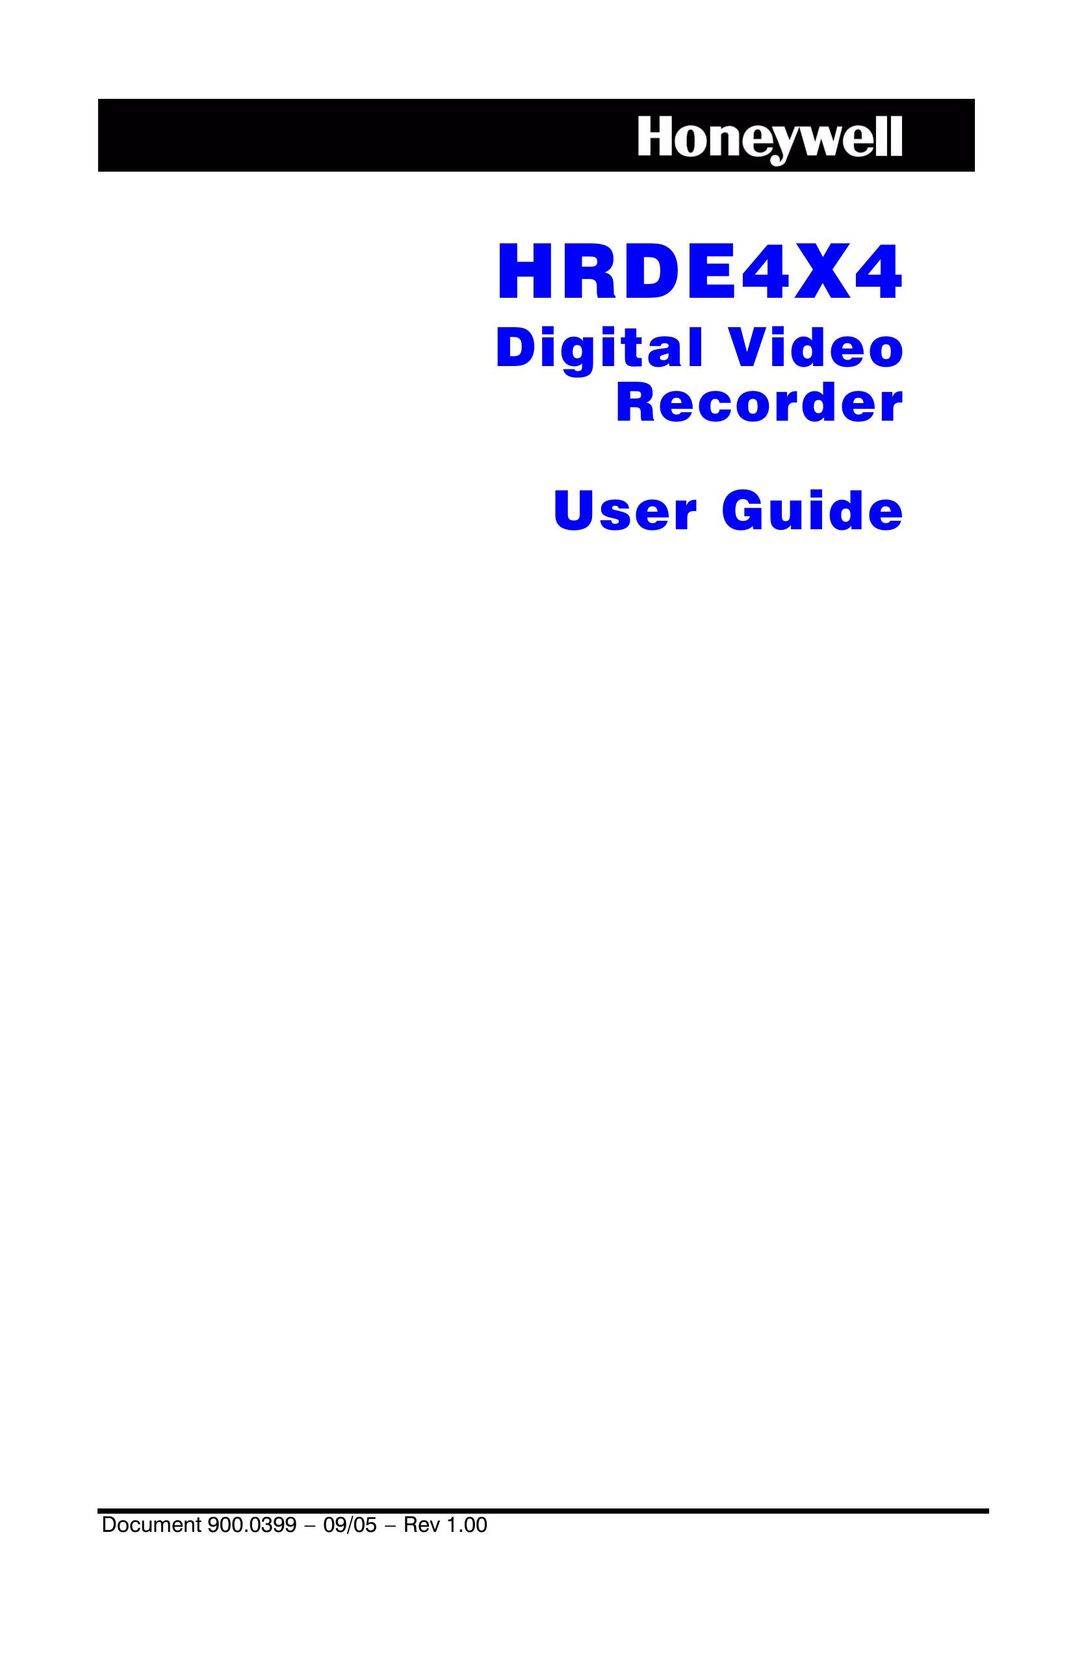 Honeywell HRDE4X4 DVR User Manual